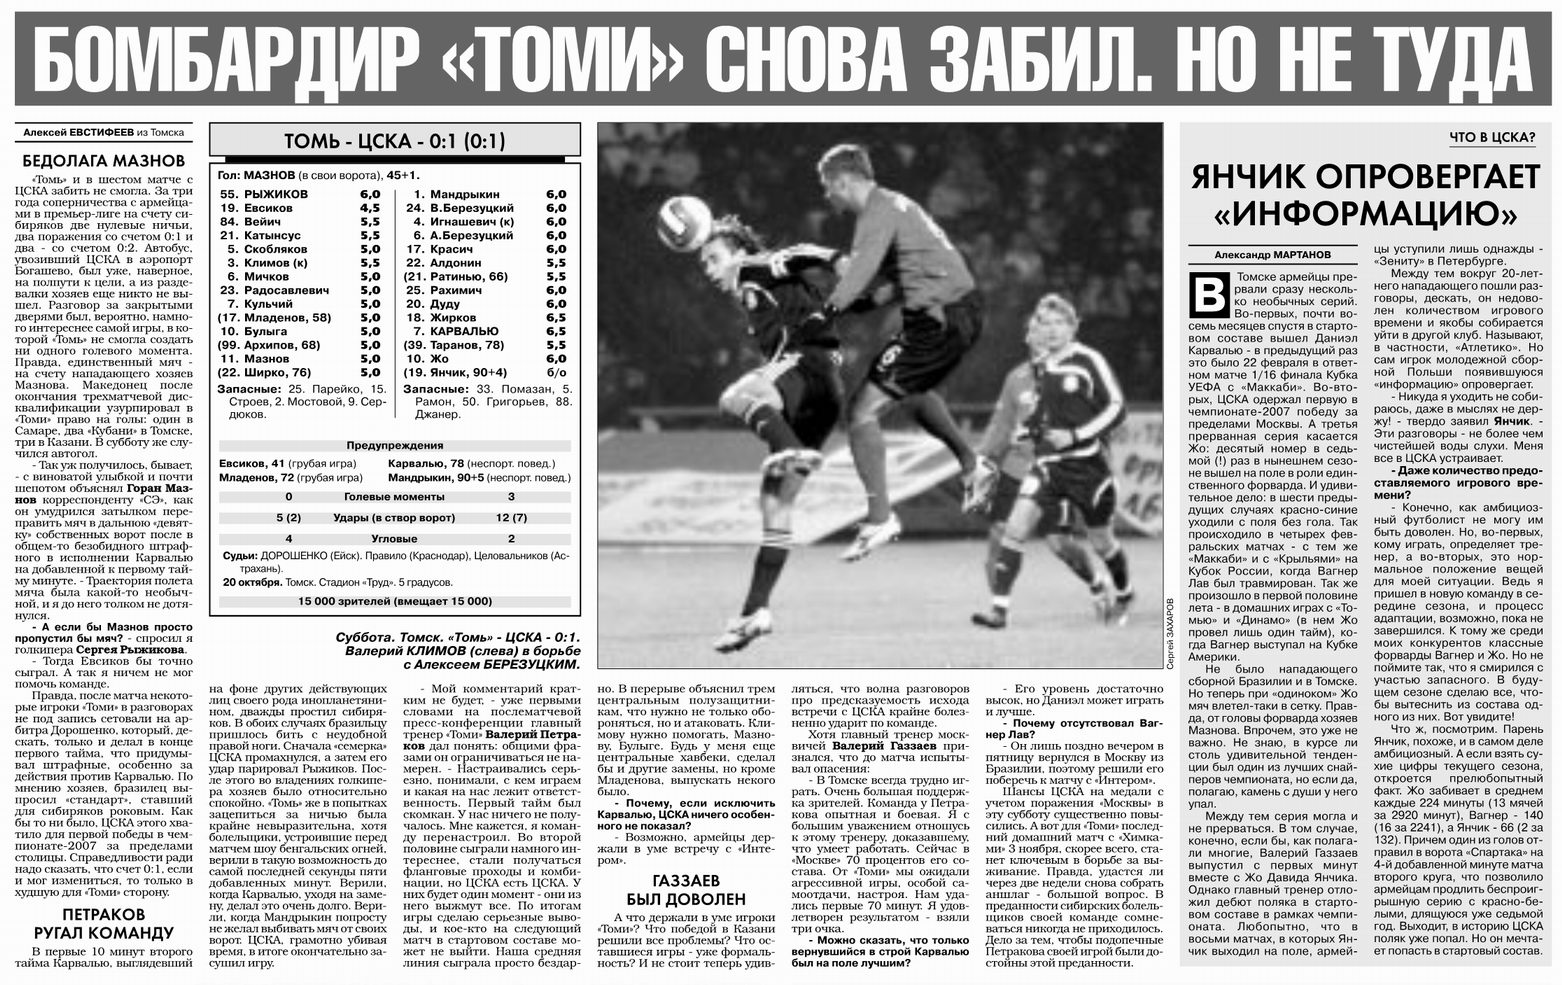 2007-10-20.Tom-CSKA.1